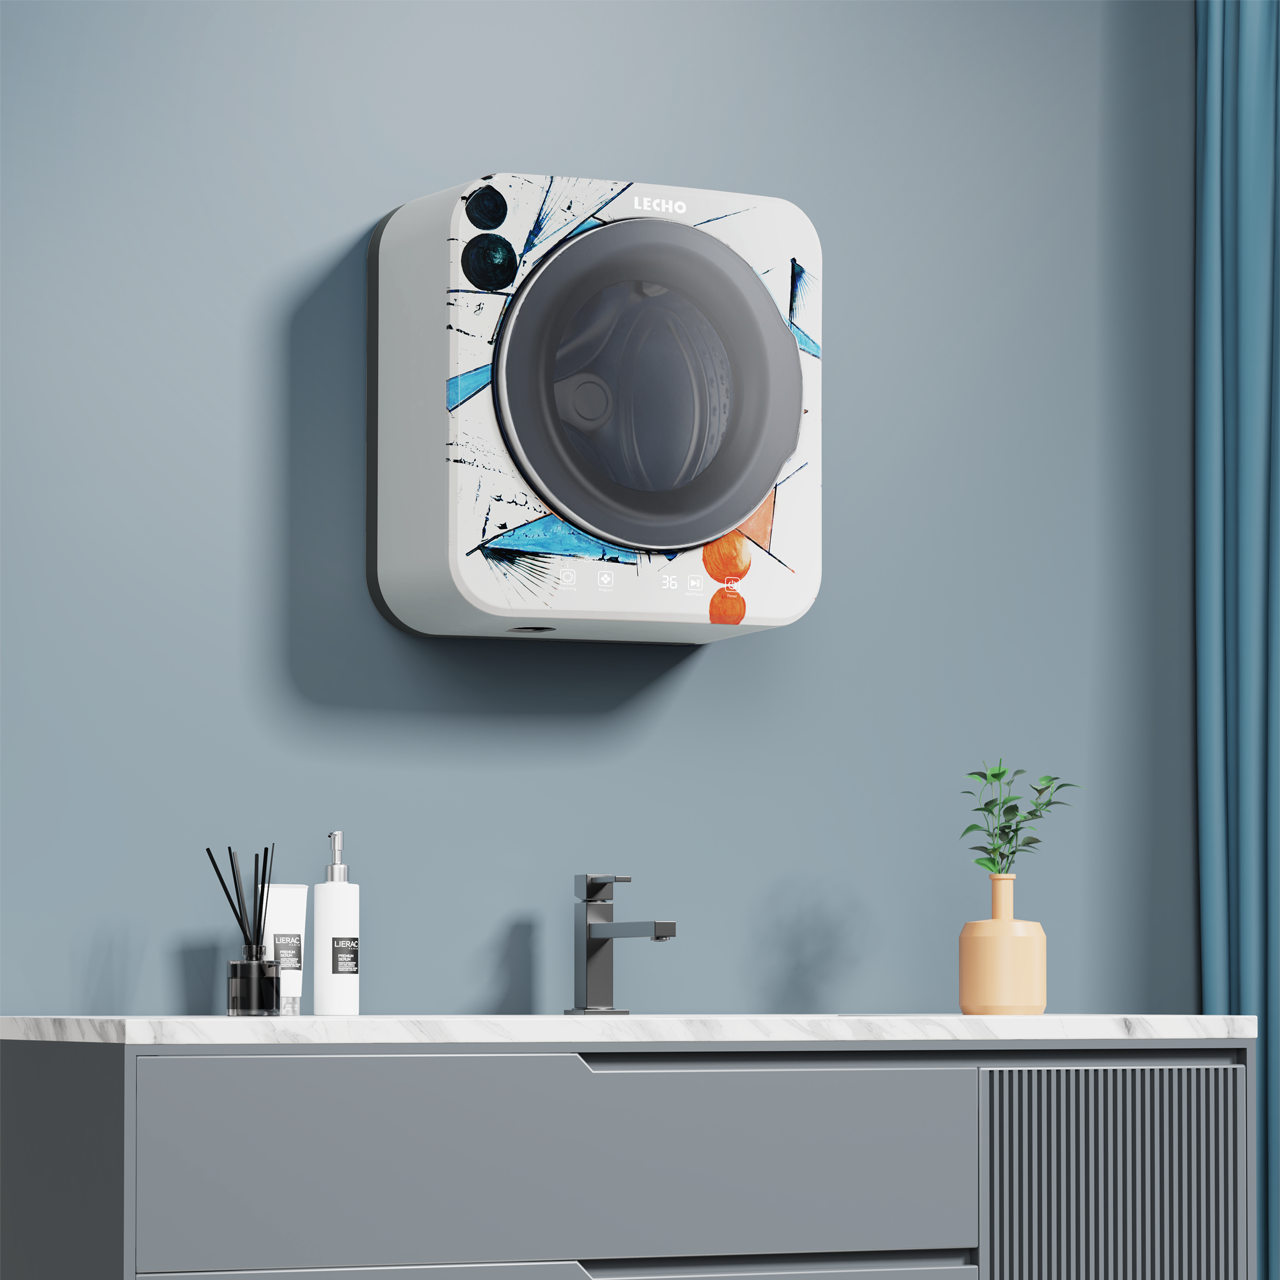 Wall-mounted washing machine designed by LECHO